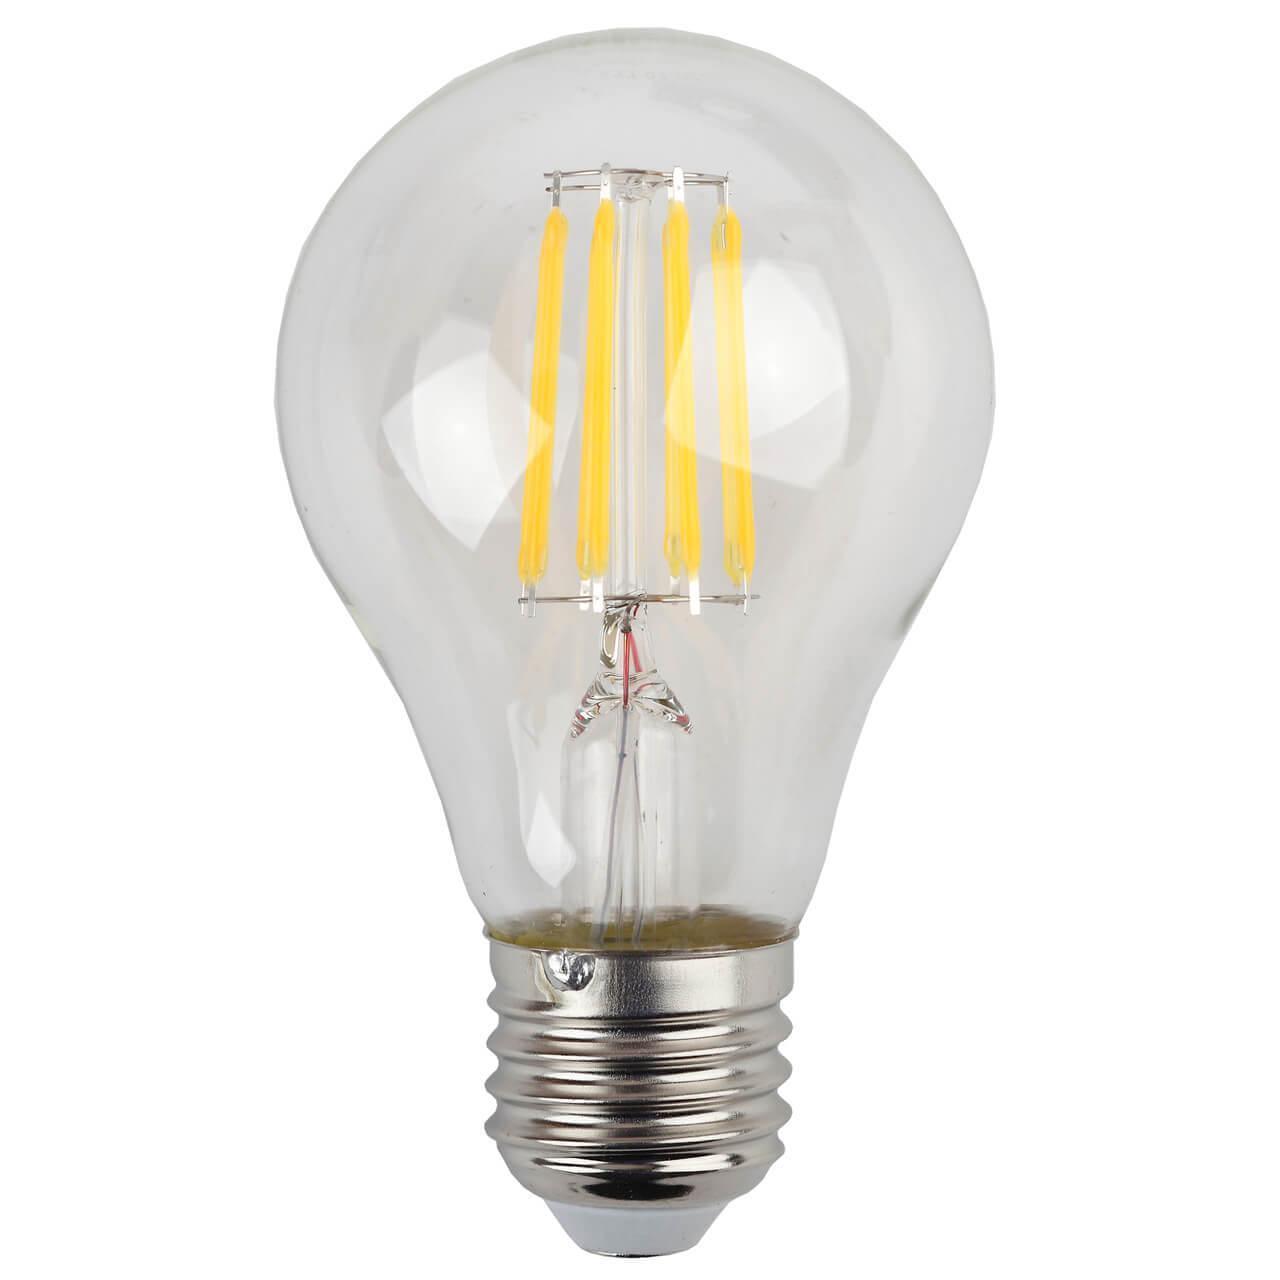 Картинка Лампа светодиодная филаментная ЭРА E27 9W 4000K прозрачная A60-9W-840-E27 frost Б0035034